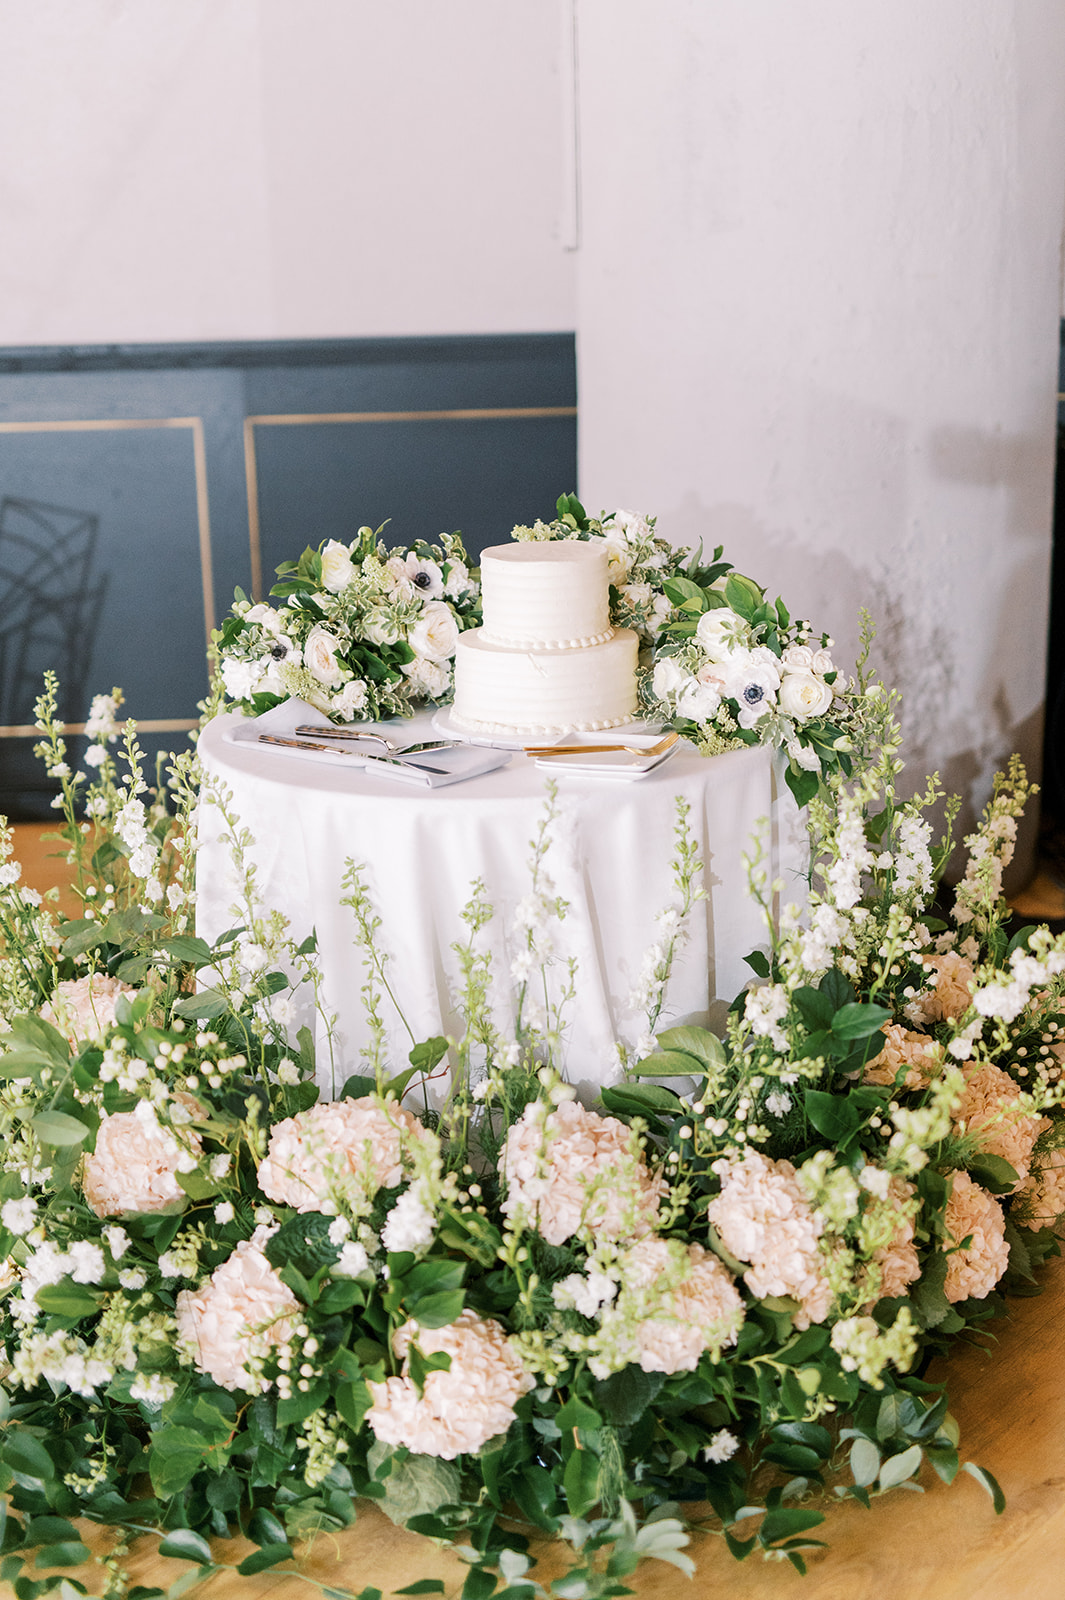 lush wedding cake installation with full white blooms for Secret Urban Garden Wedding at Philadelphia’s Fitler Club